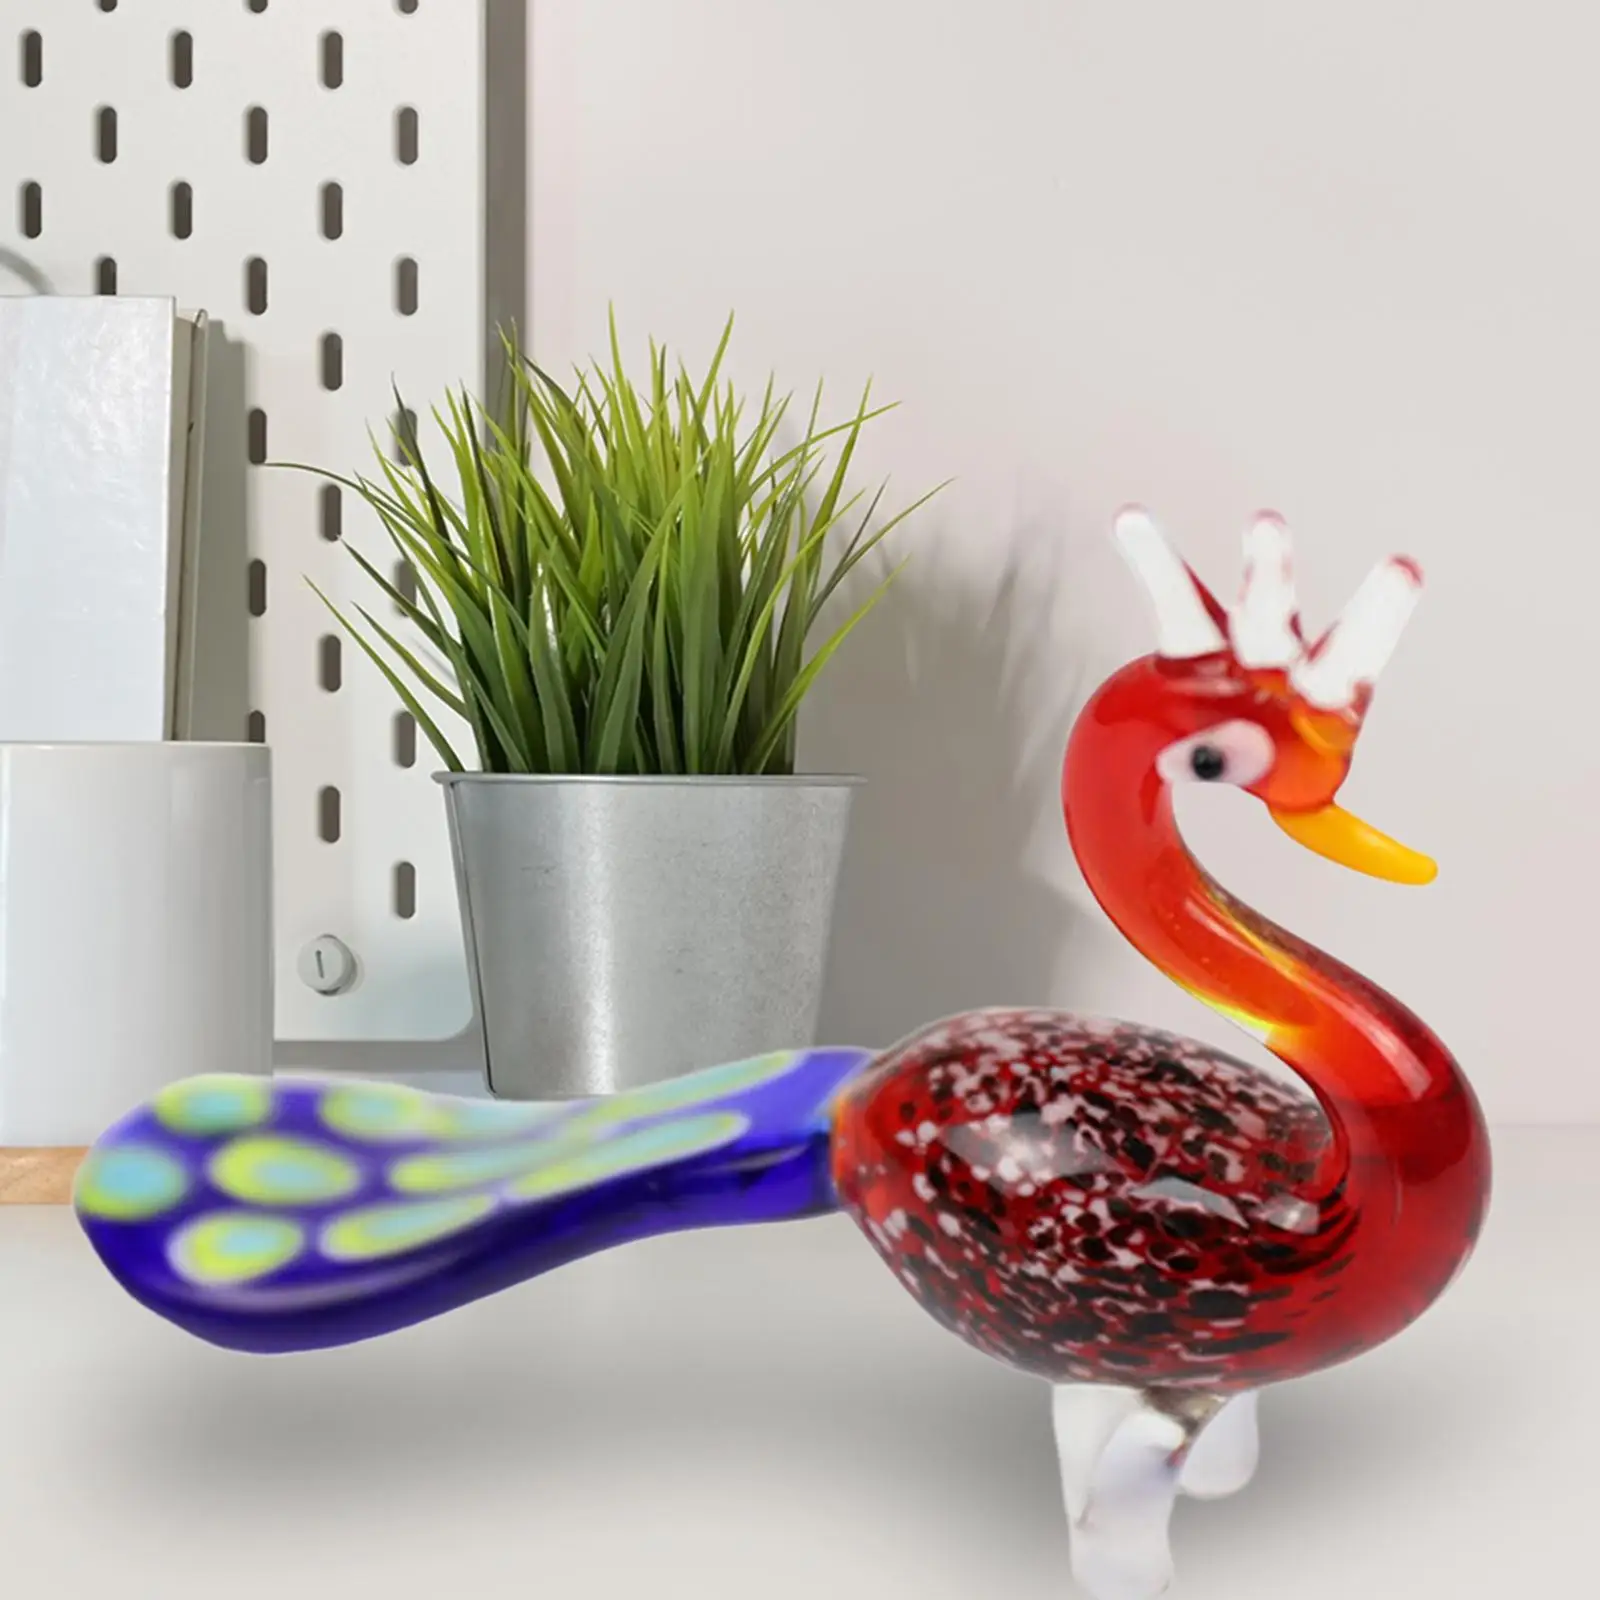 Glass Blown Peacocks Housewarming Gift Sun Resistant Delicate Details Cute